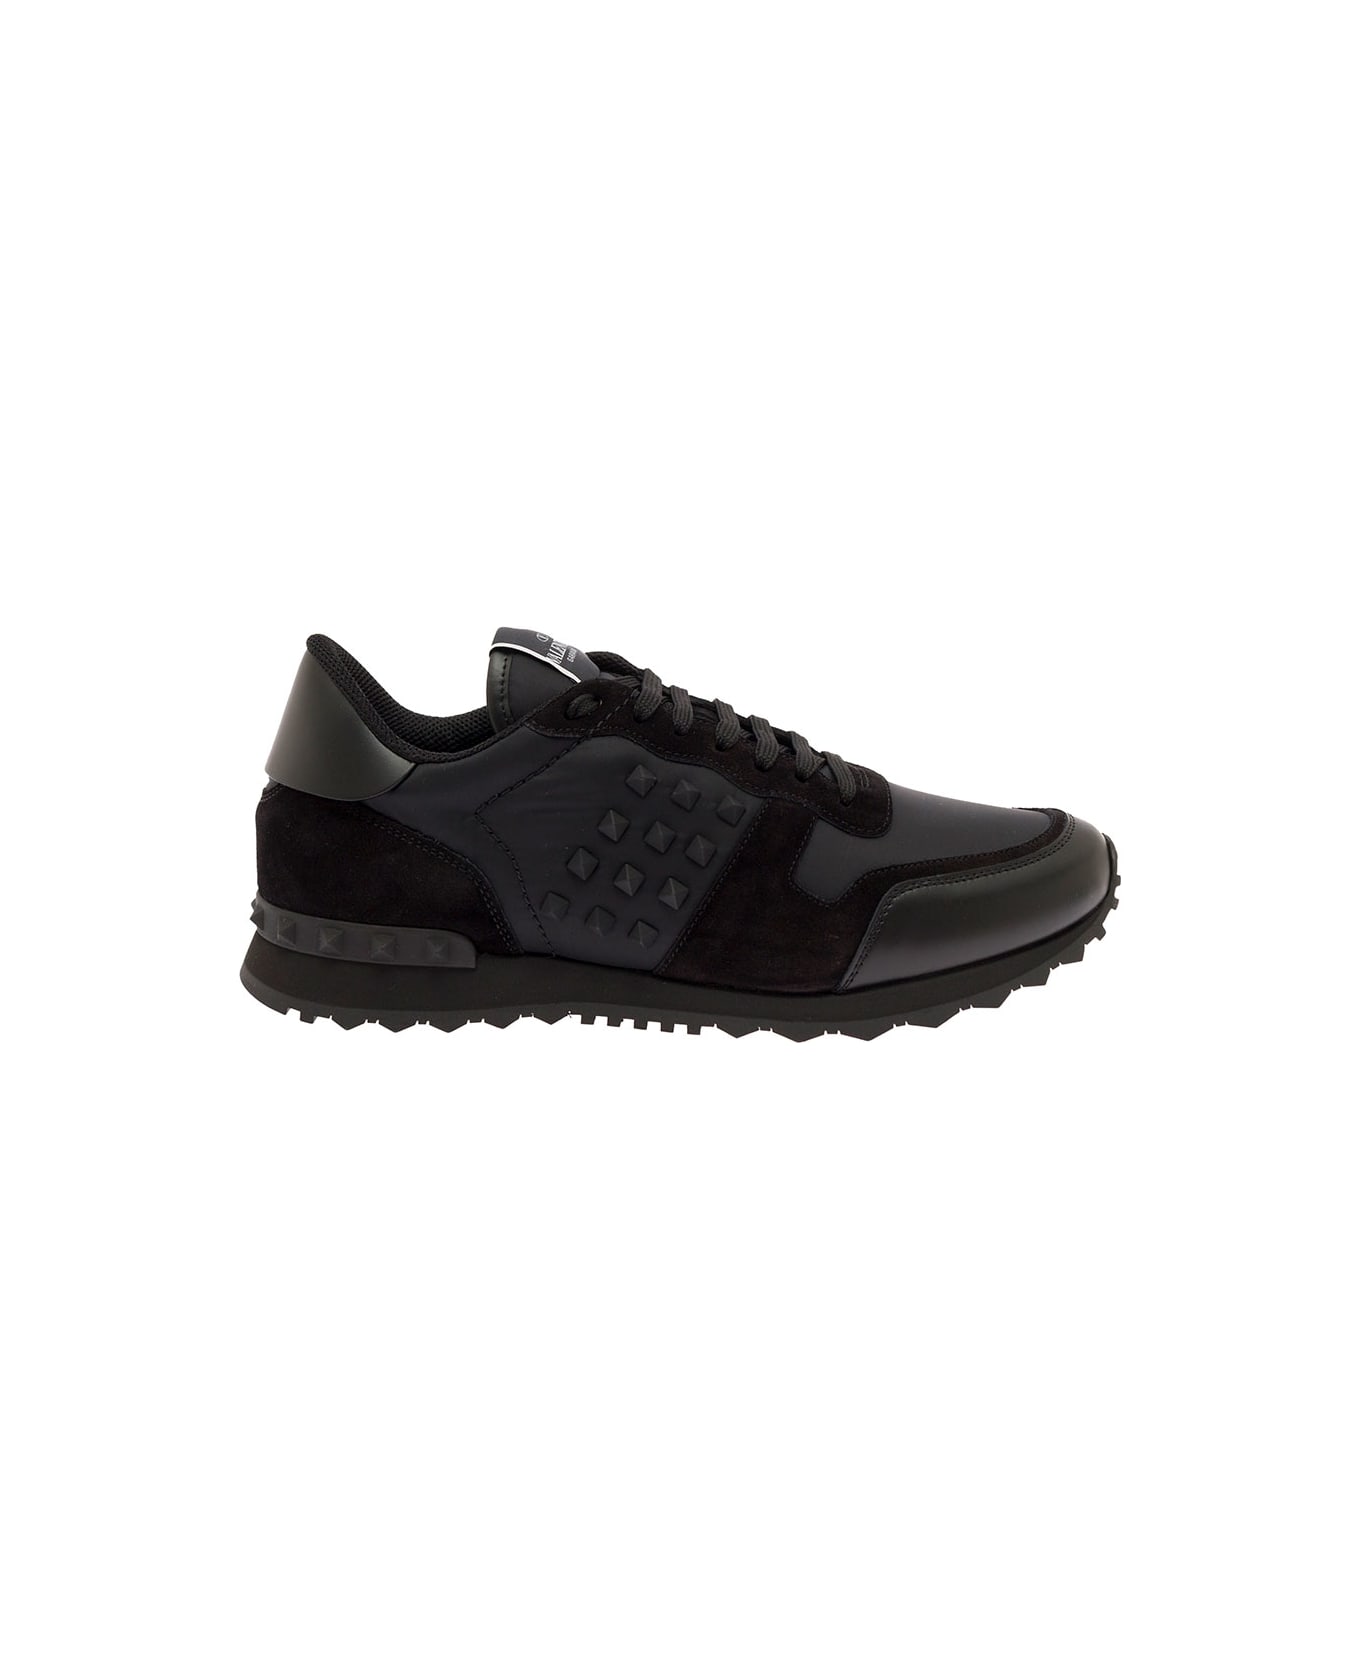 Valentino Garavani Black Leather And Nylon Rockstud Sneakers Man Valentino Garavani - Black